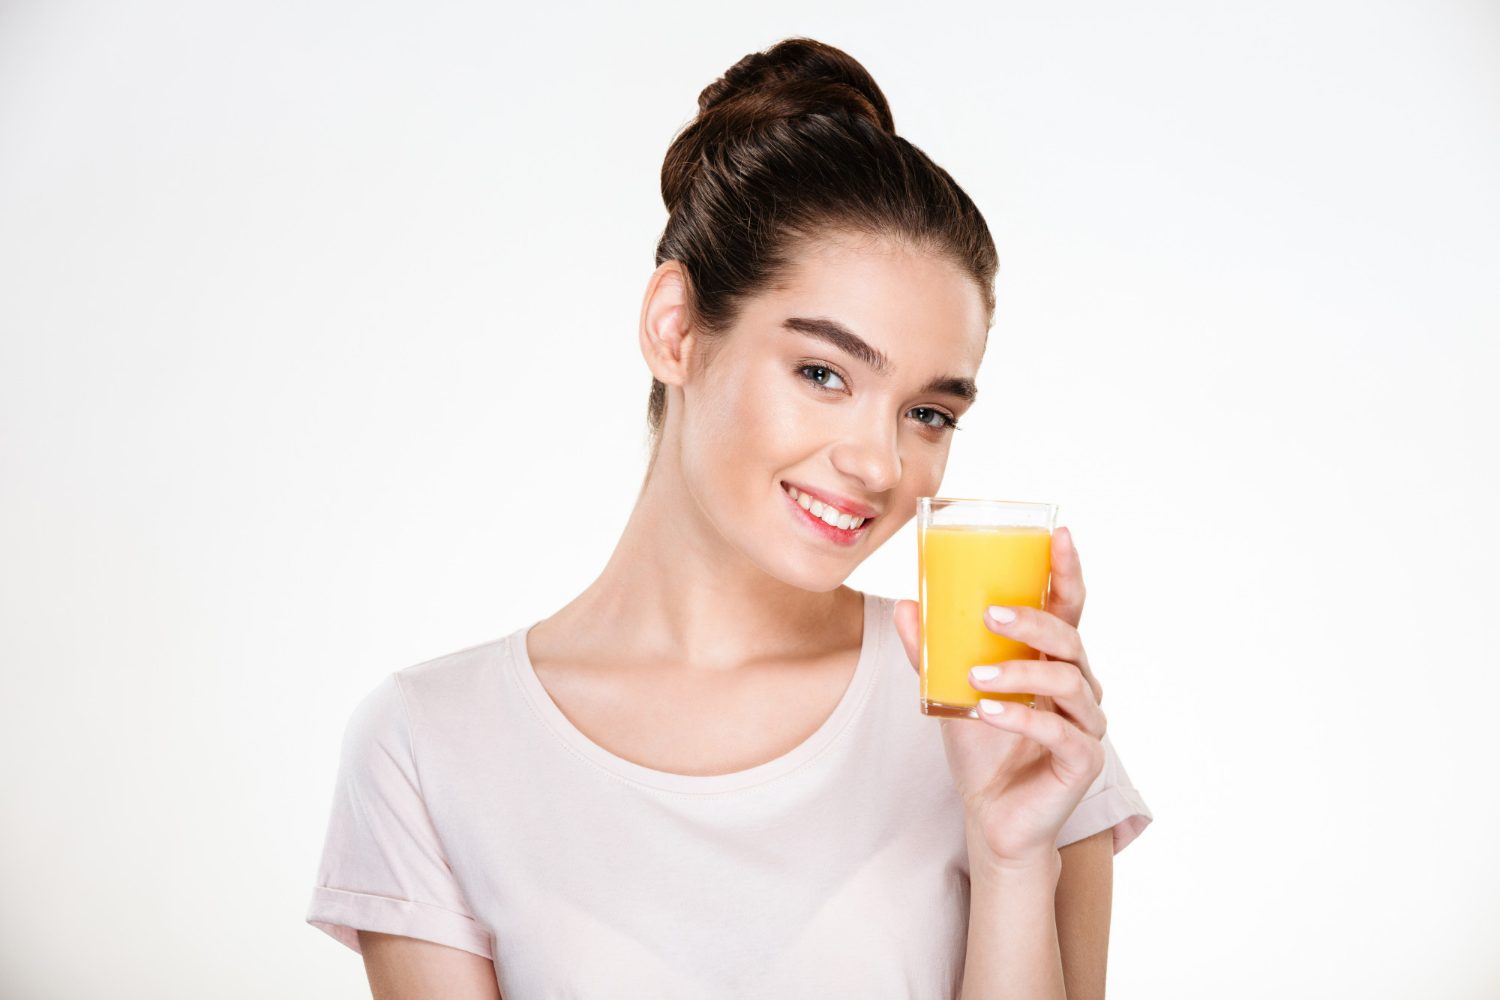 does pineapple juice help with wisdom teeth